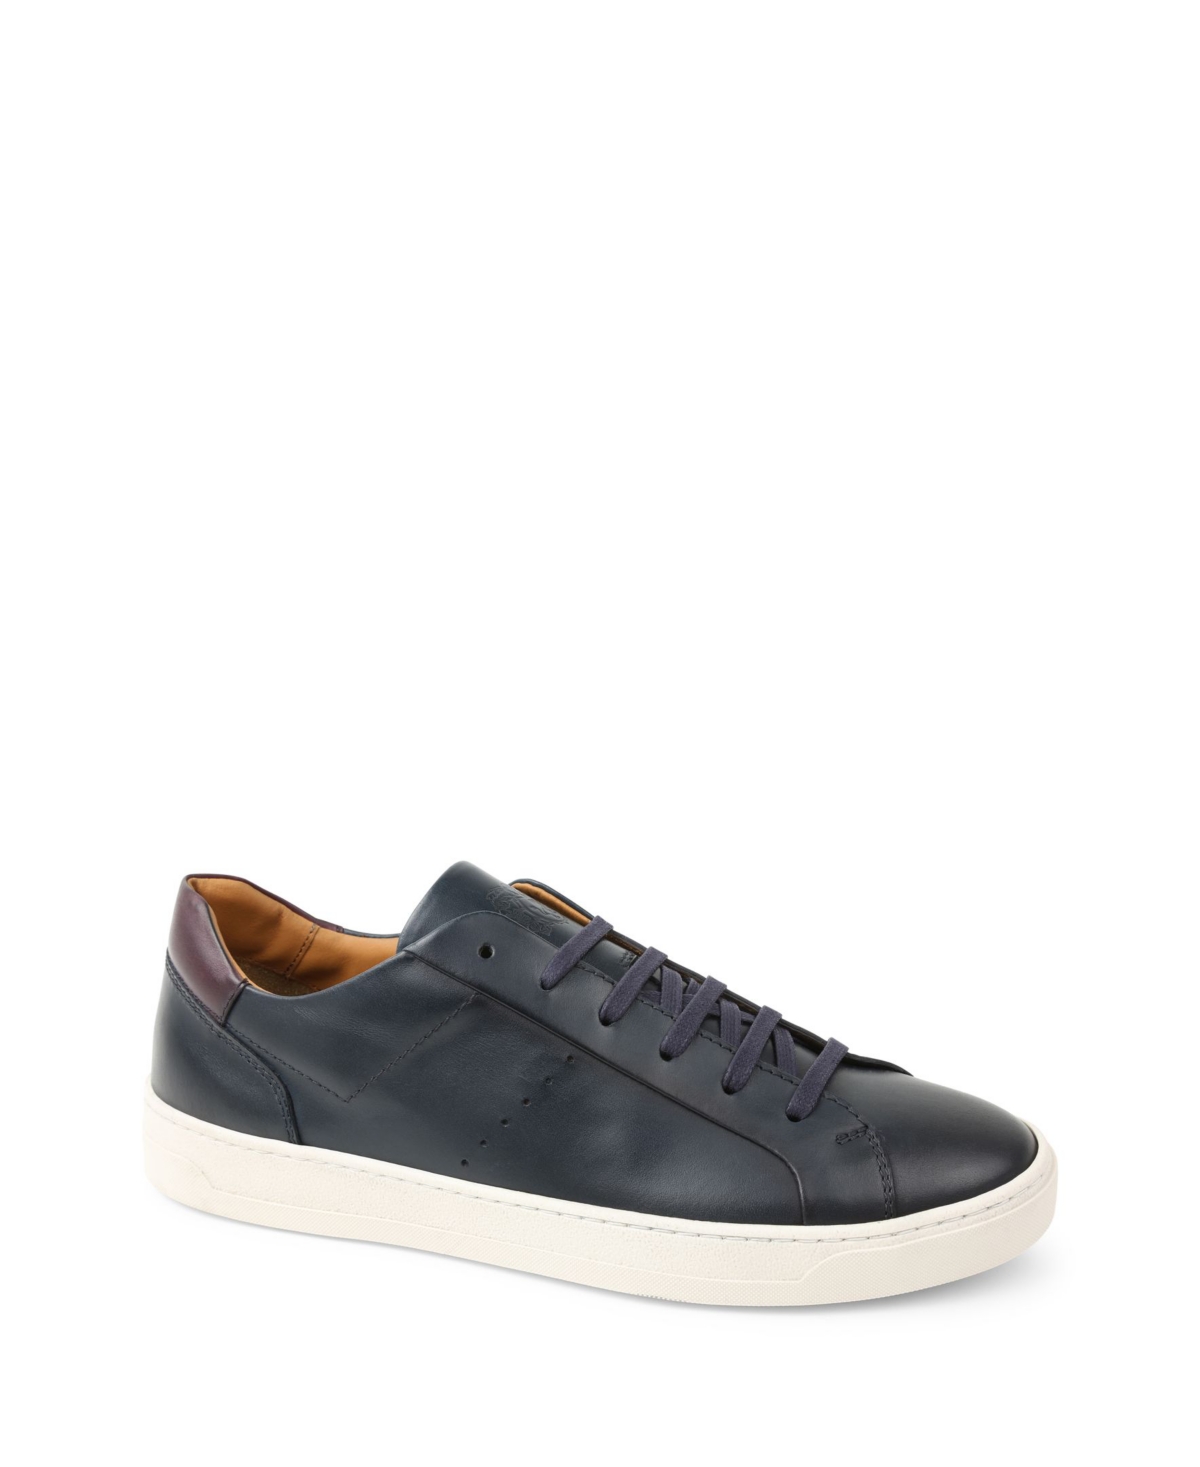 Men's Dante Casual Oxford Shoe - Black